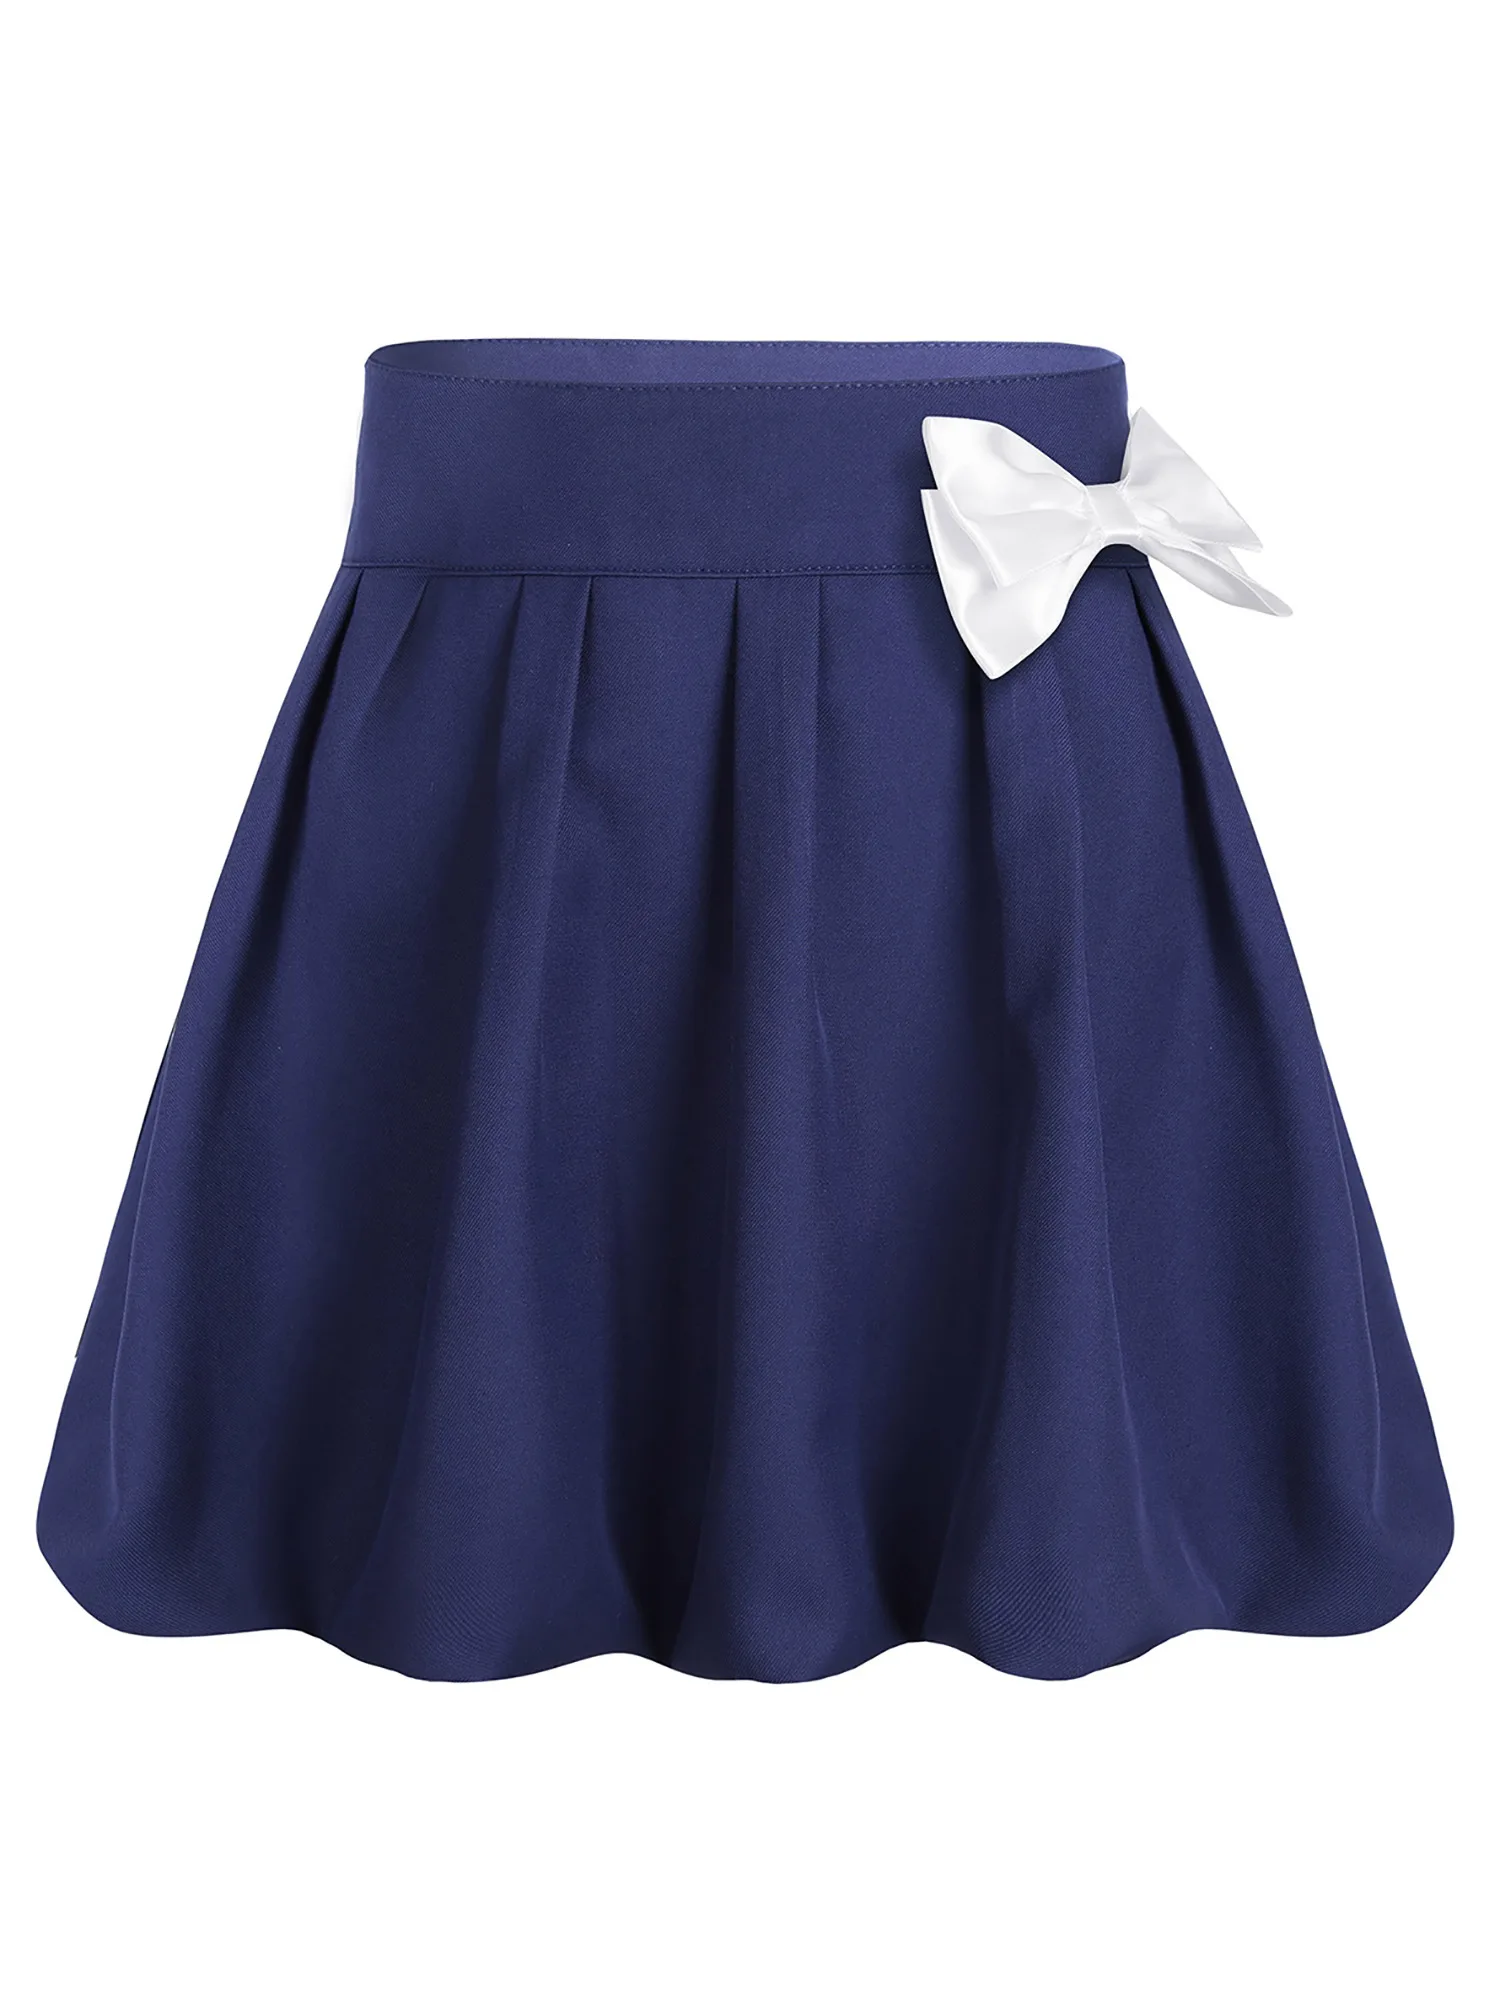 Freebily Big Girls Classical Pleated School Uniform Dance Skirt Bowknot Scooter Dress with Hidden Shorts 